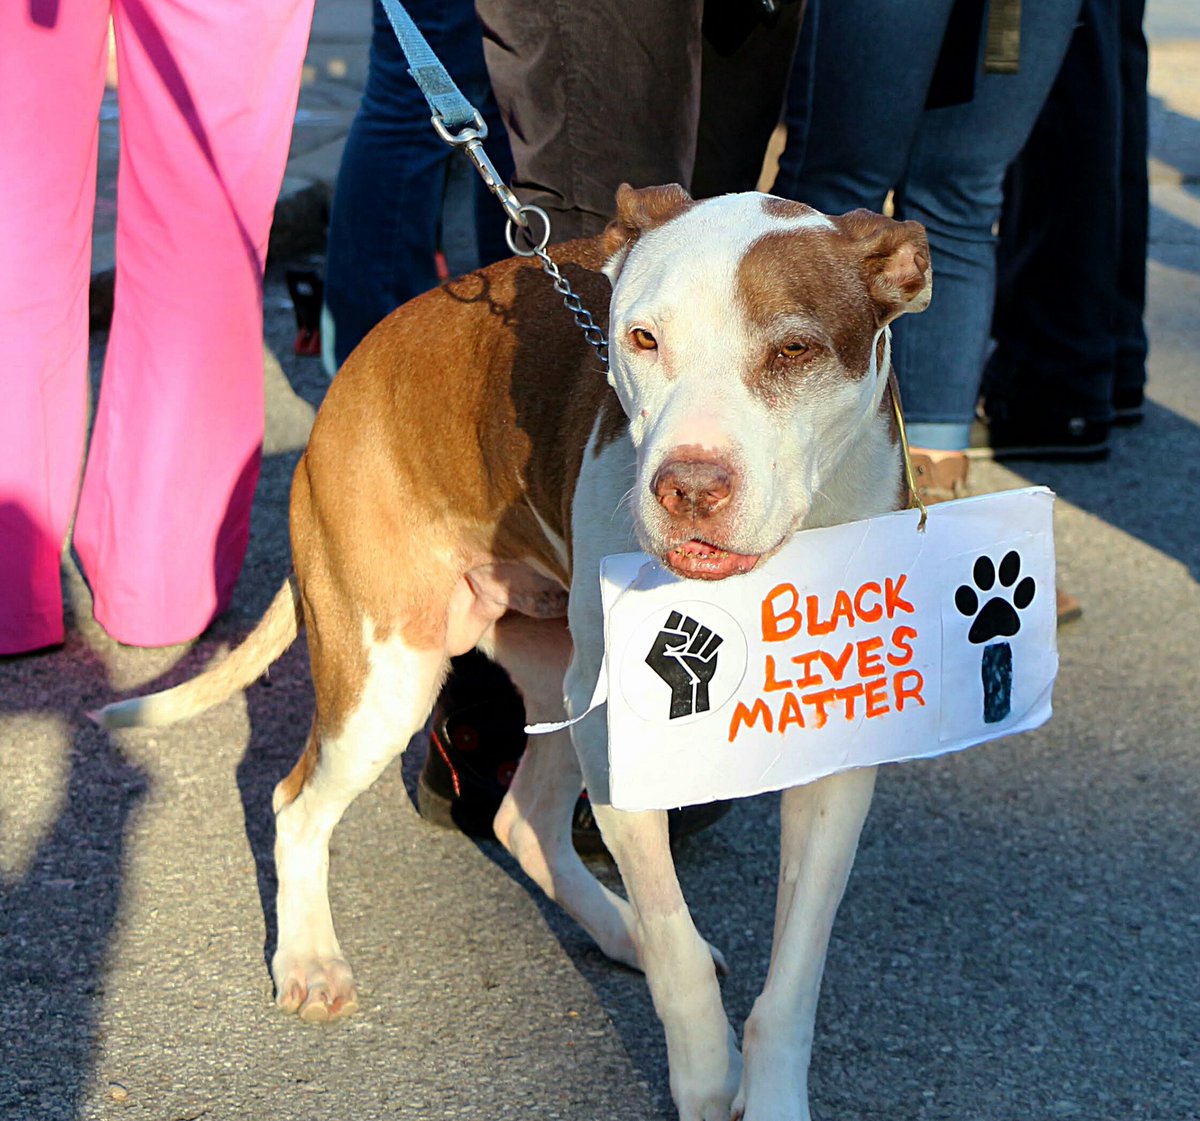 A very good doggo in St Louis supporting #BlackLivesMatter.
#StephonClark 
#AltonSterling 
#DannyRayThomas 
#AnthonyLamarSmith